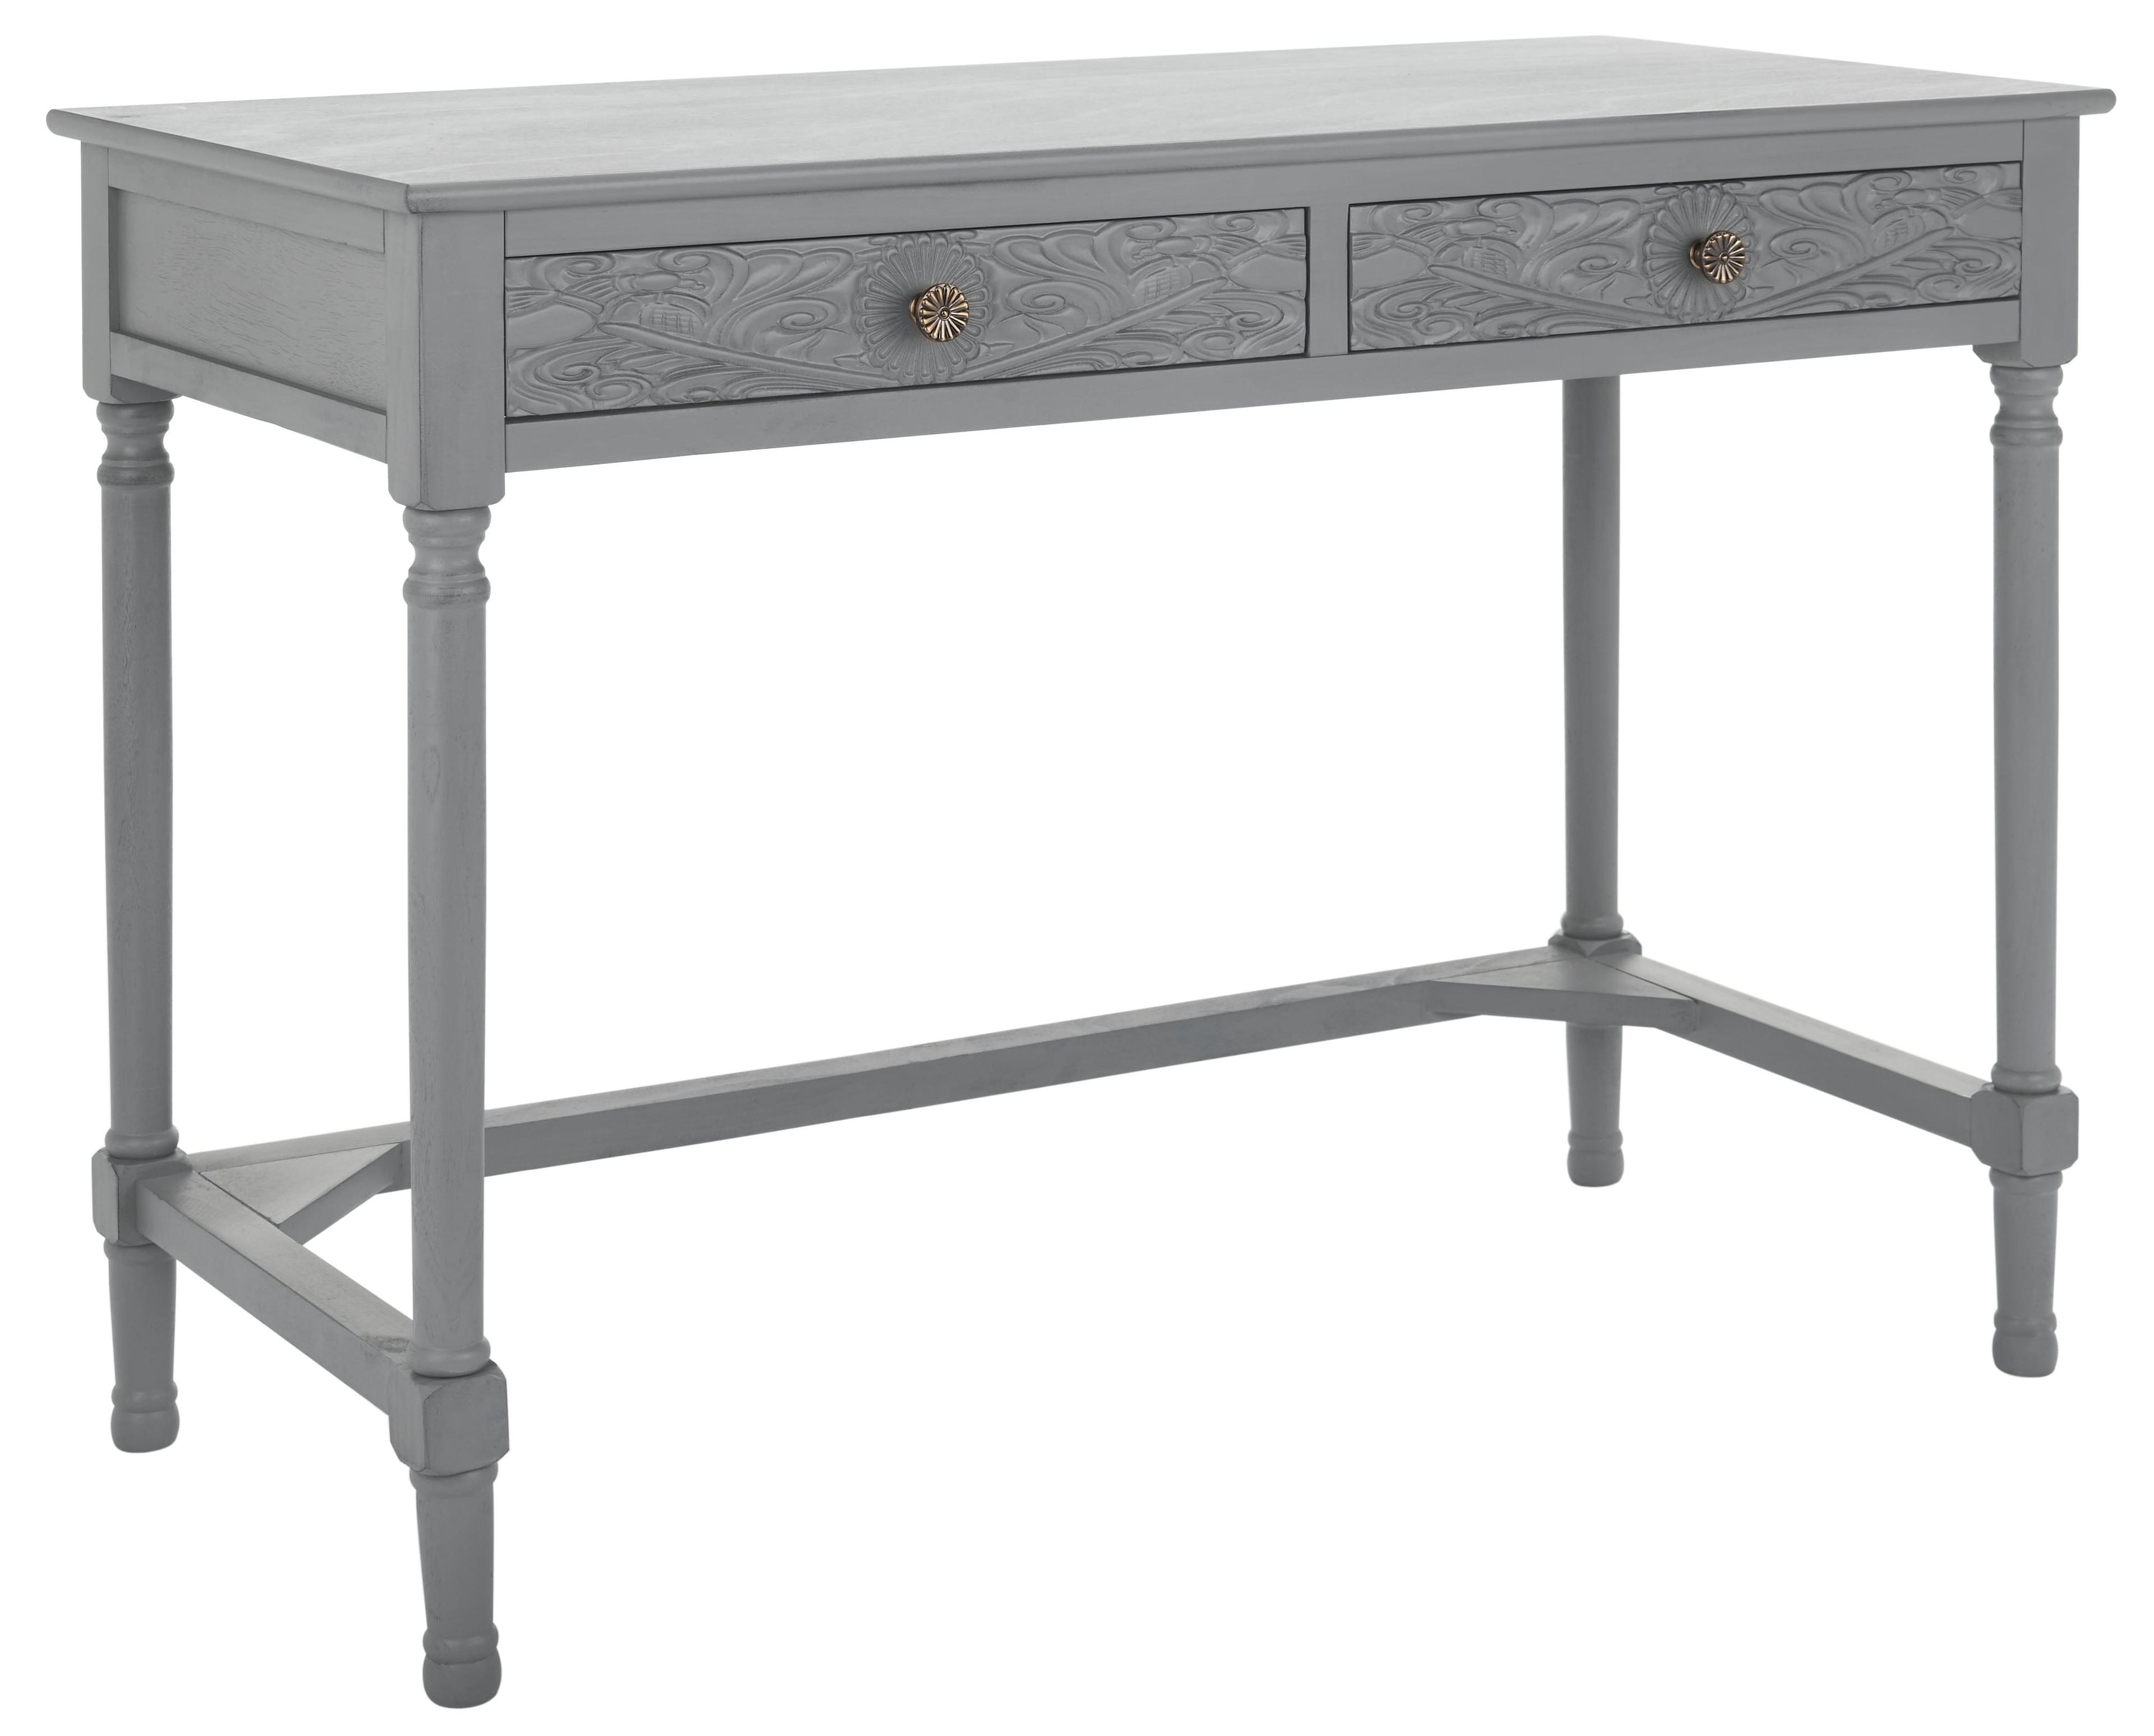 Josie Artisan Carved Floral 46" Wood Desk with Drawers in Distressed Grey